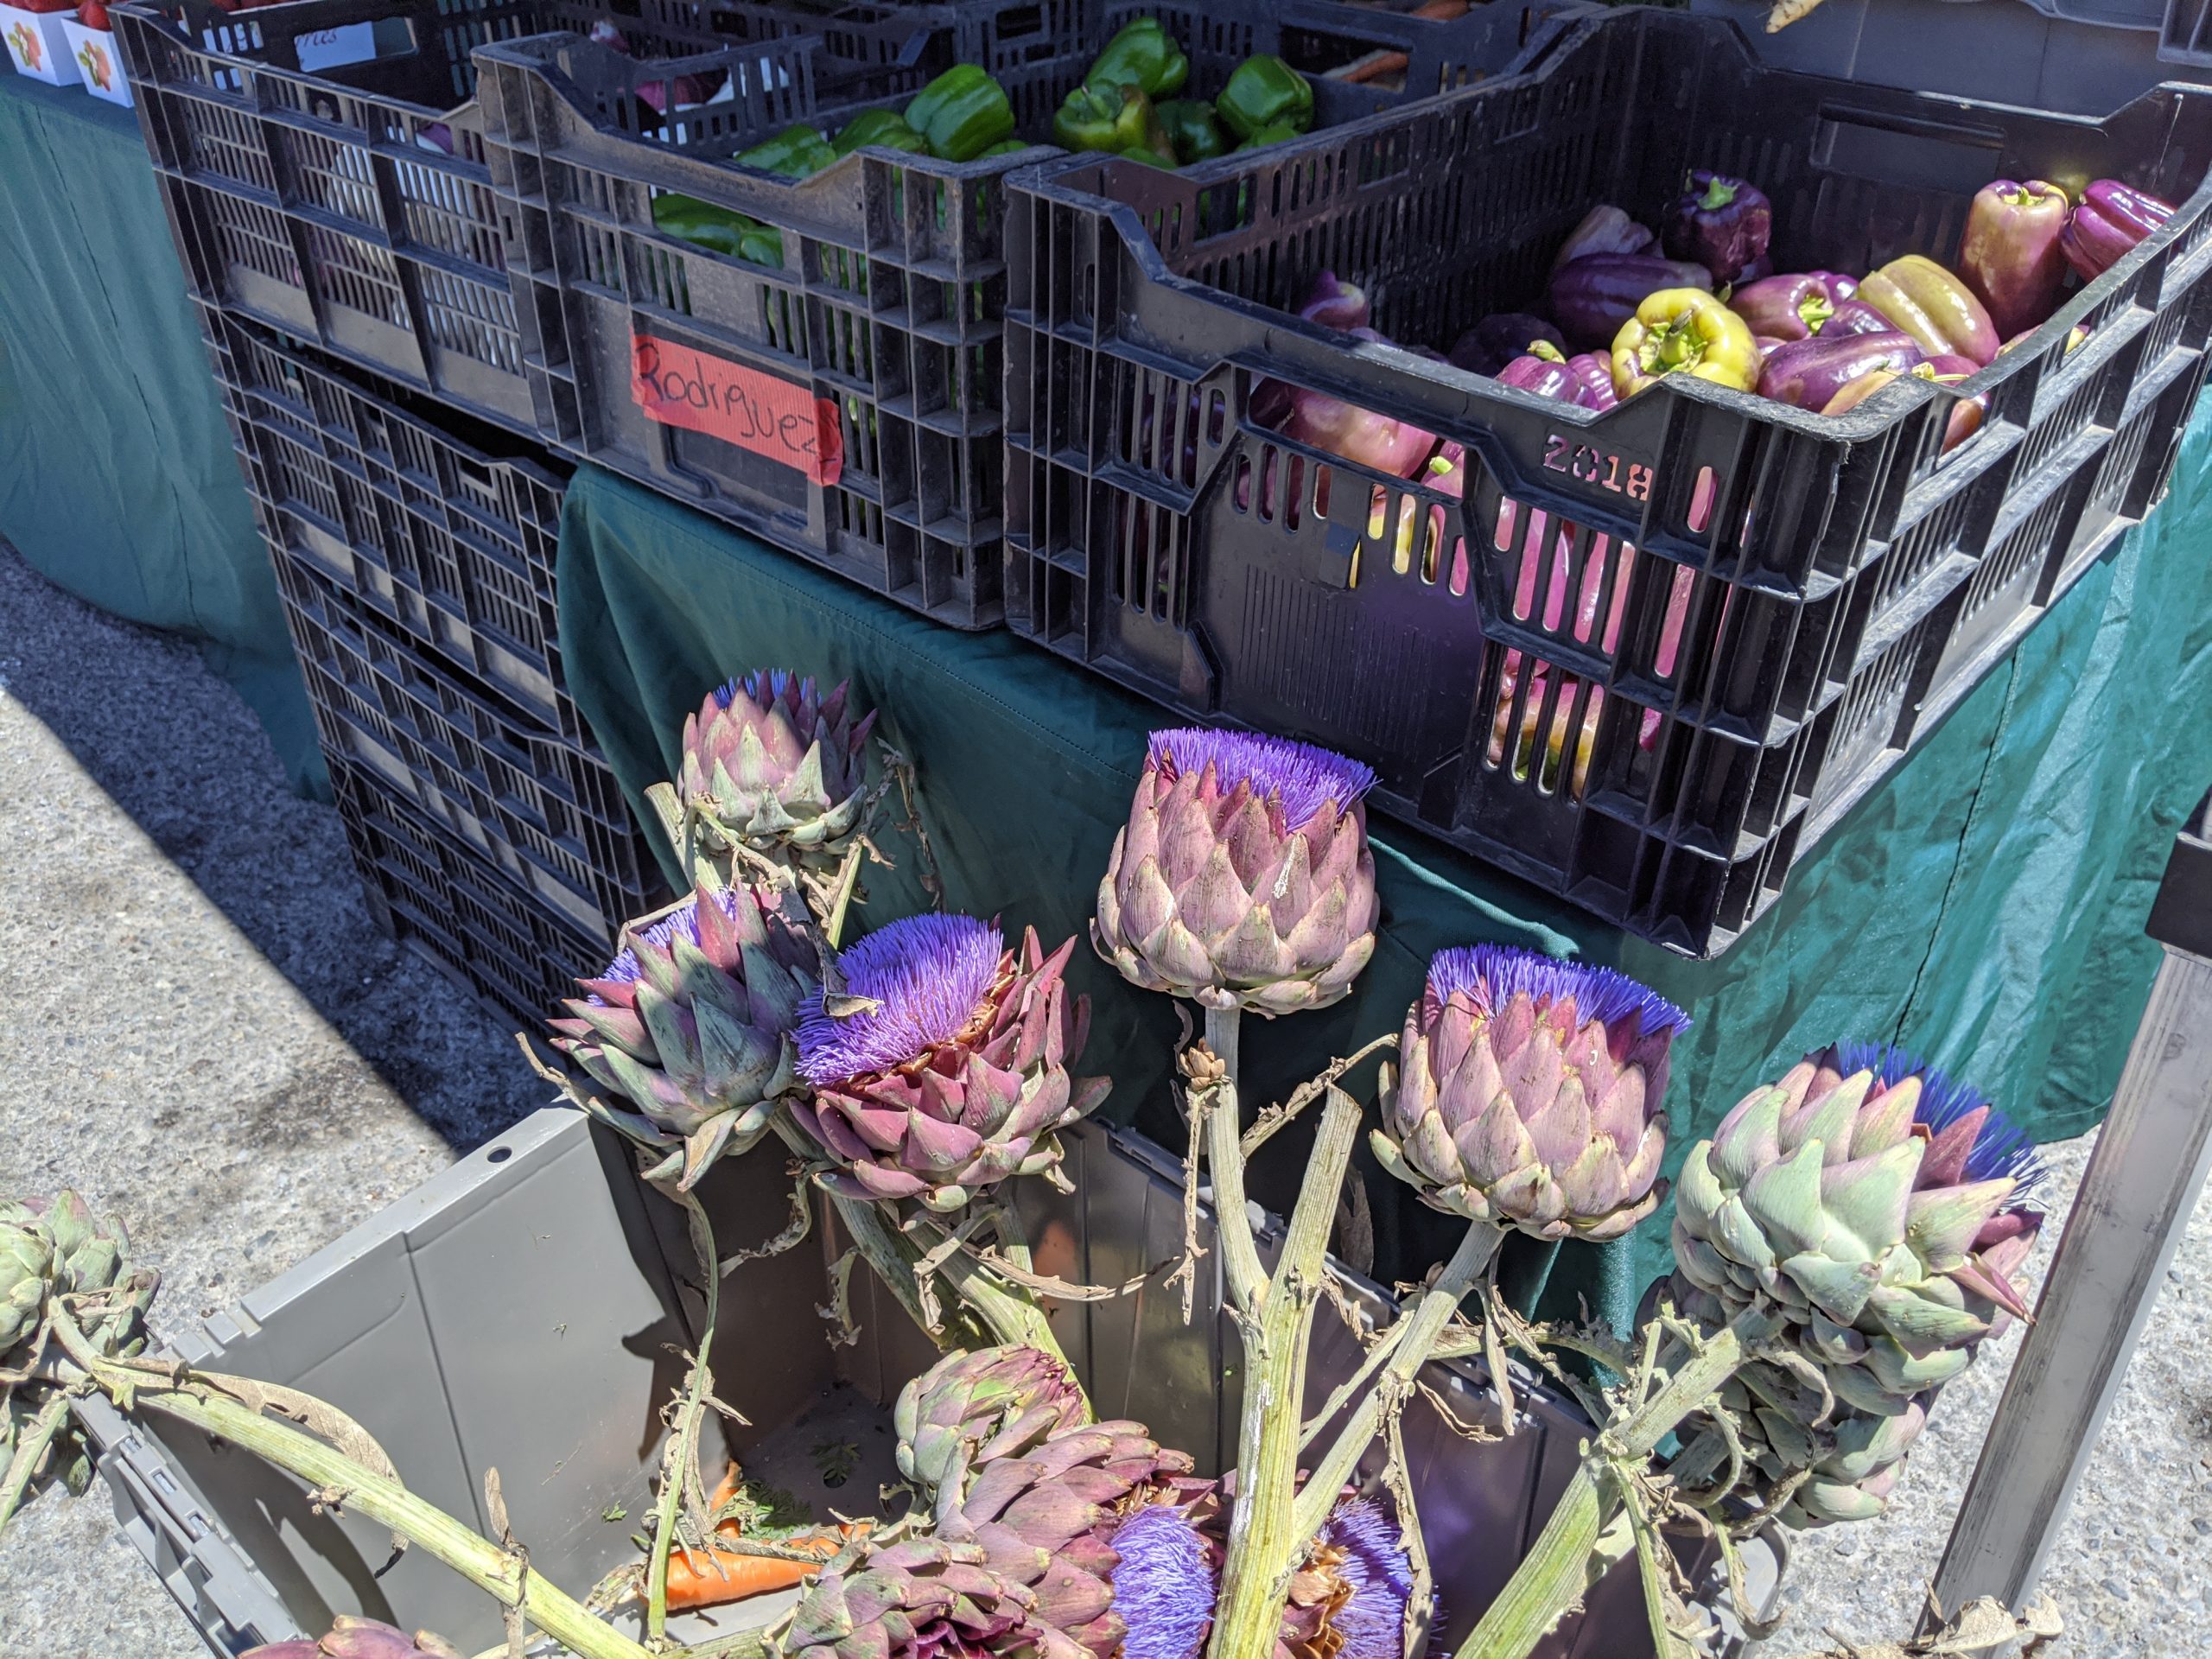 A crate of purple artichoke flowers at the farmers' market.